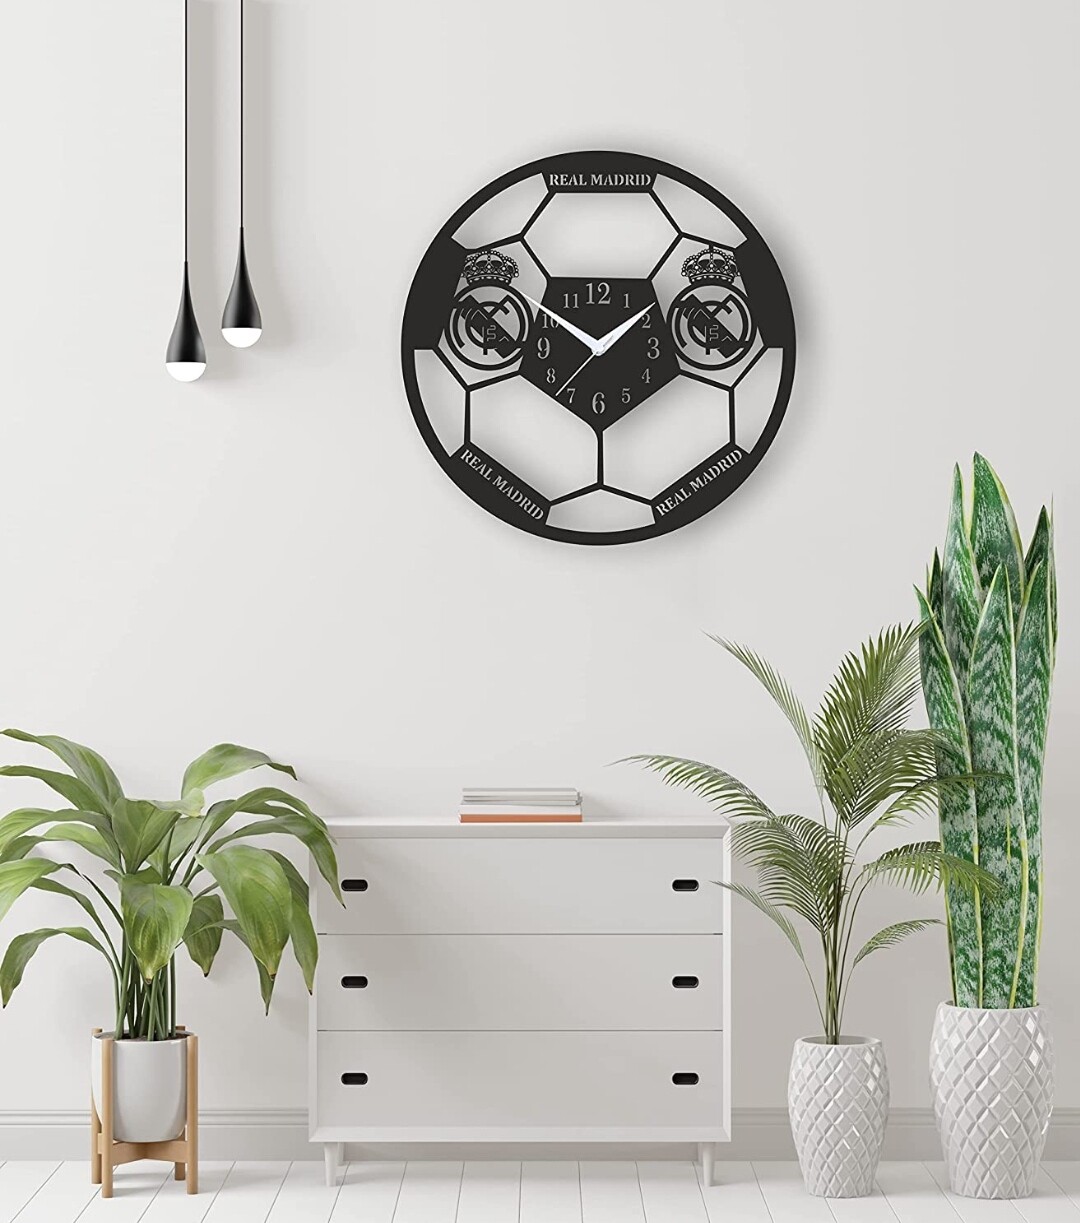 Real Madrid Football Design Wall Clock